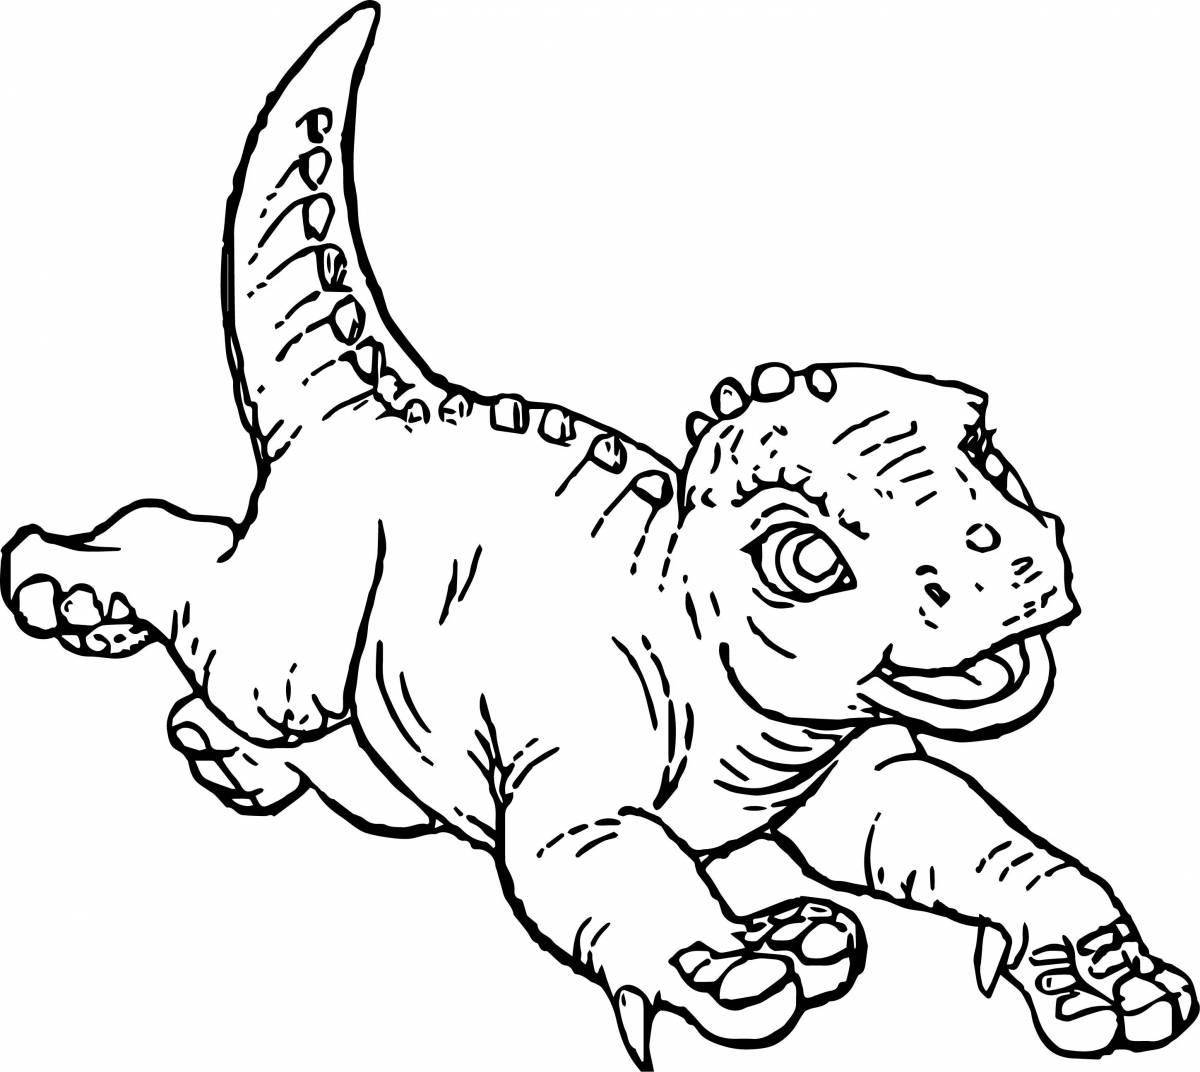 Ferocious dinosaur coloring pages